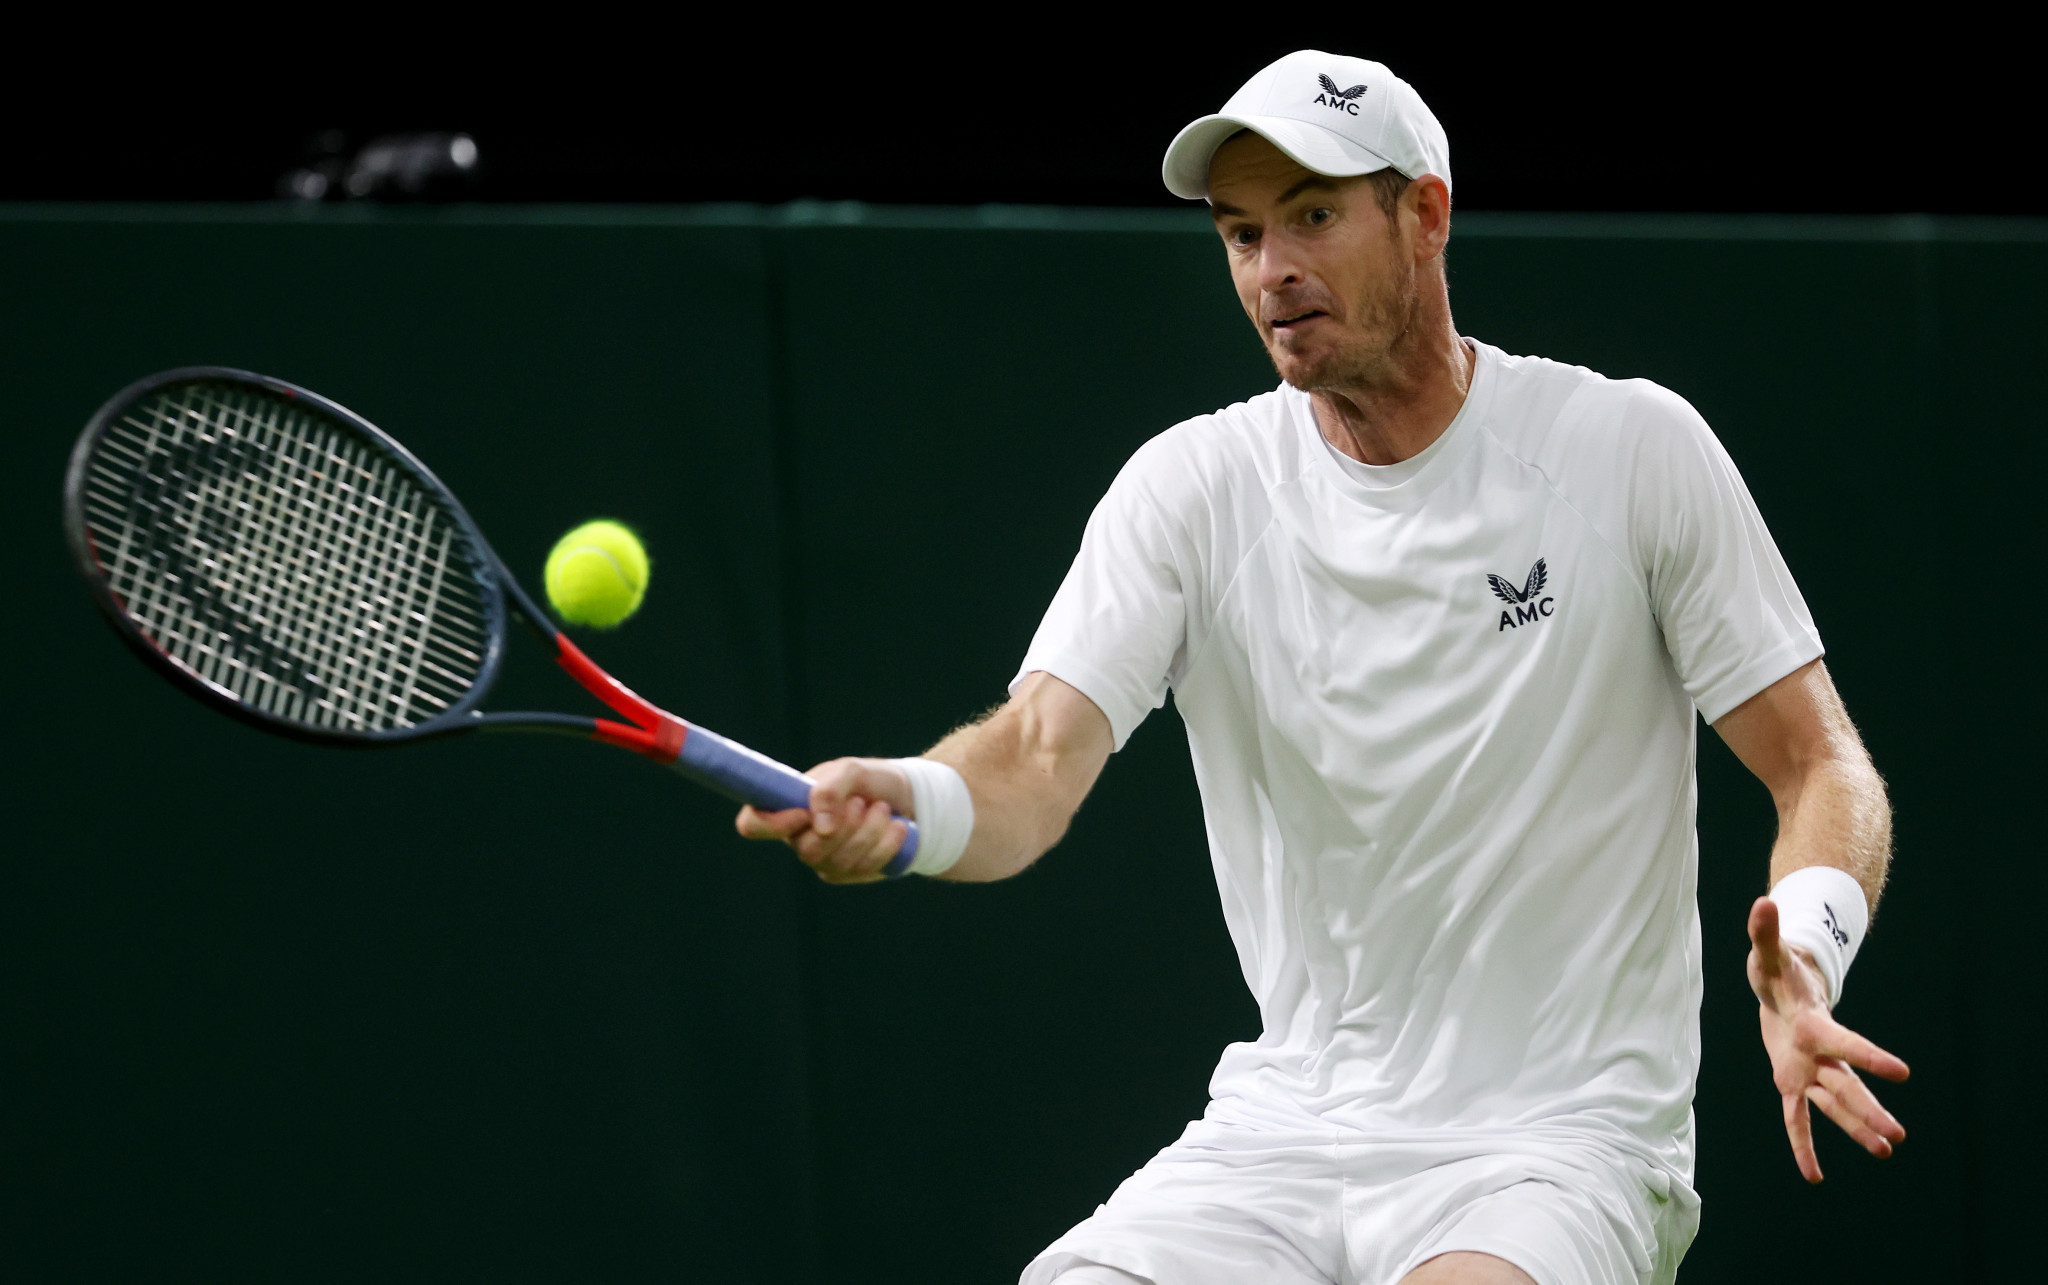 Washington ATP tournament organiser to match Murray's donation to Ukraine